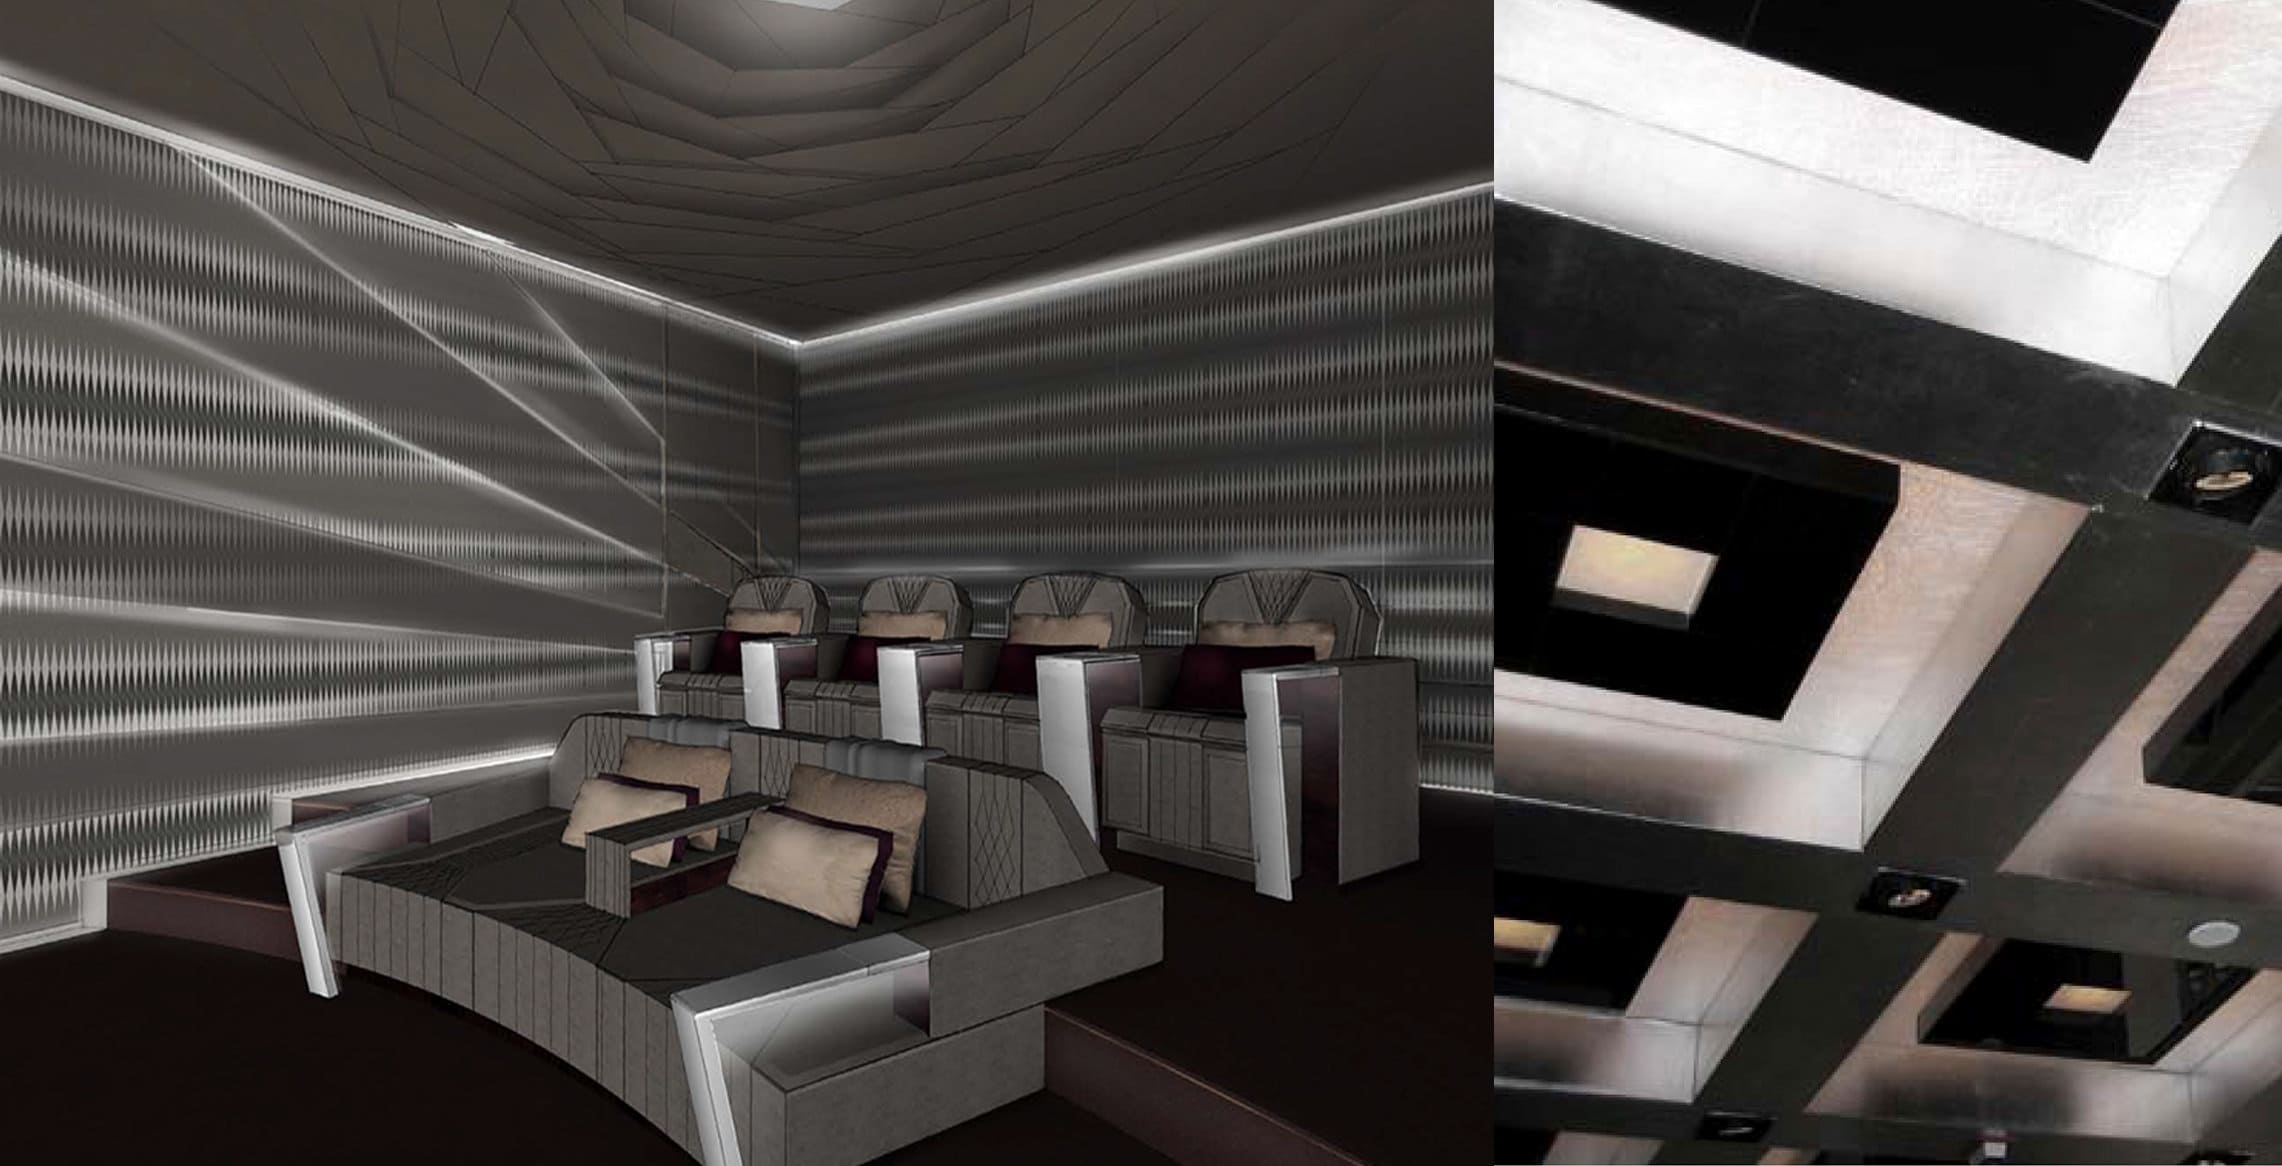 Luxury cinema room sitting place design idea